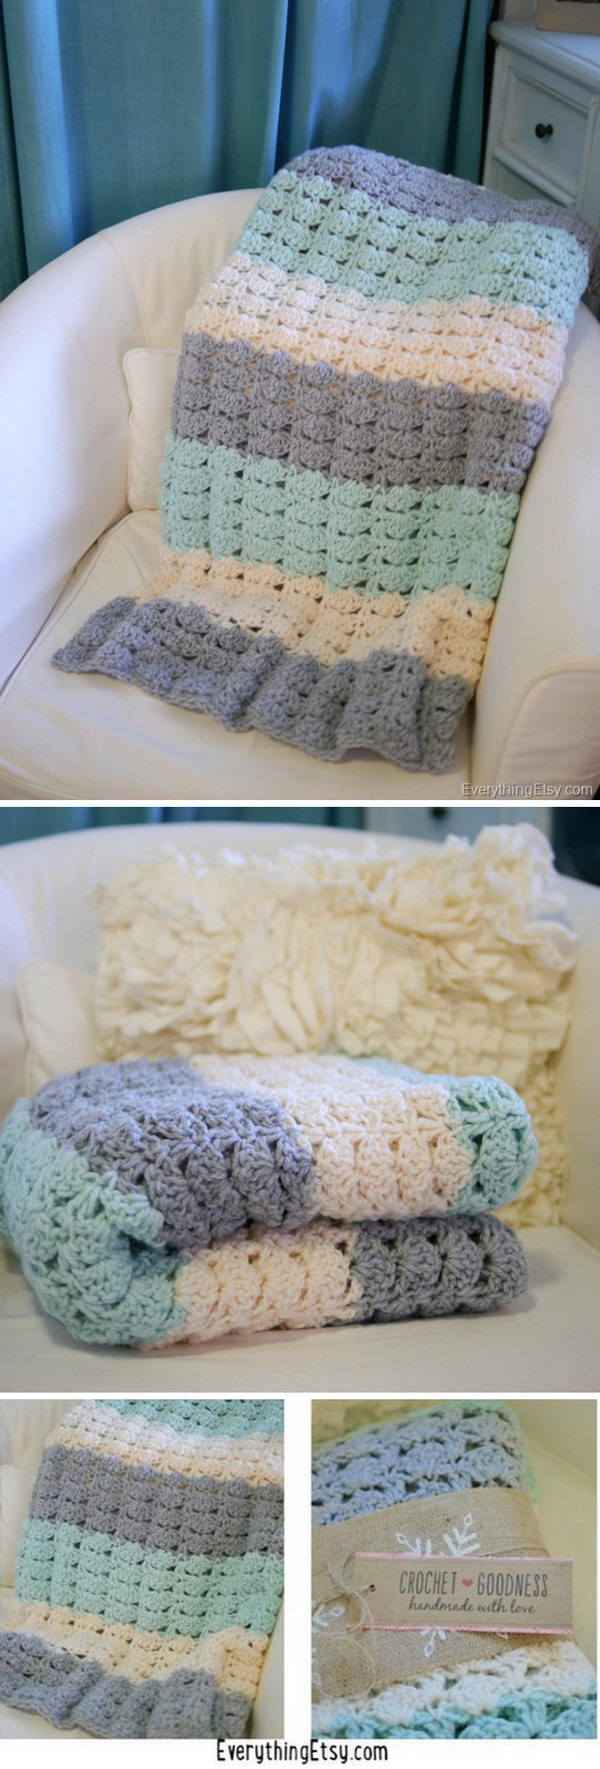 Star Shaped Crochet Blanket Pattern 20 Free Crochet Blanket Patterns With Lots Of Tutorials